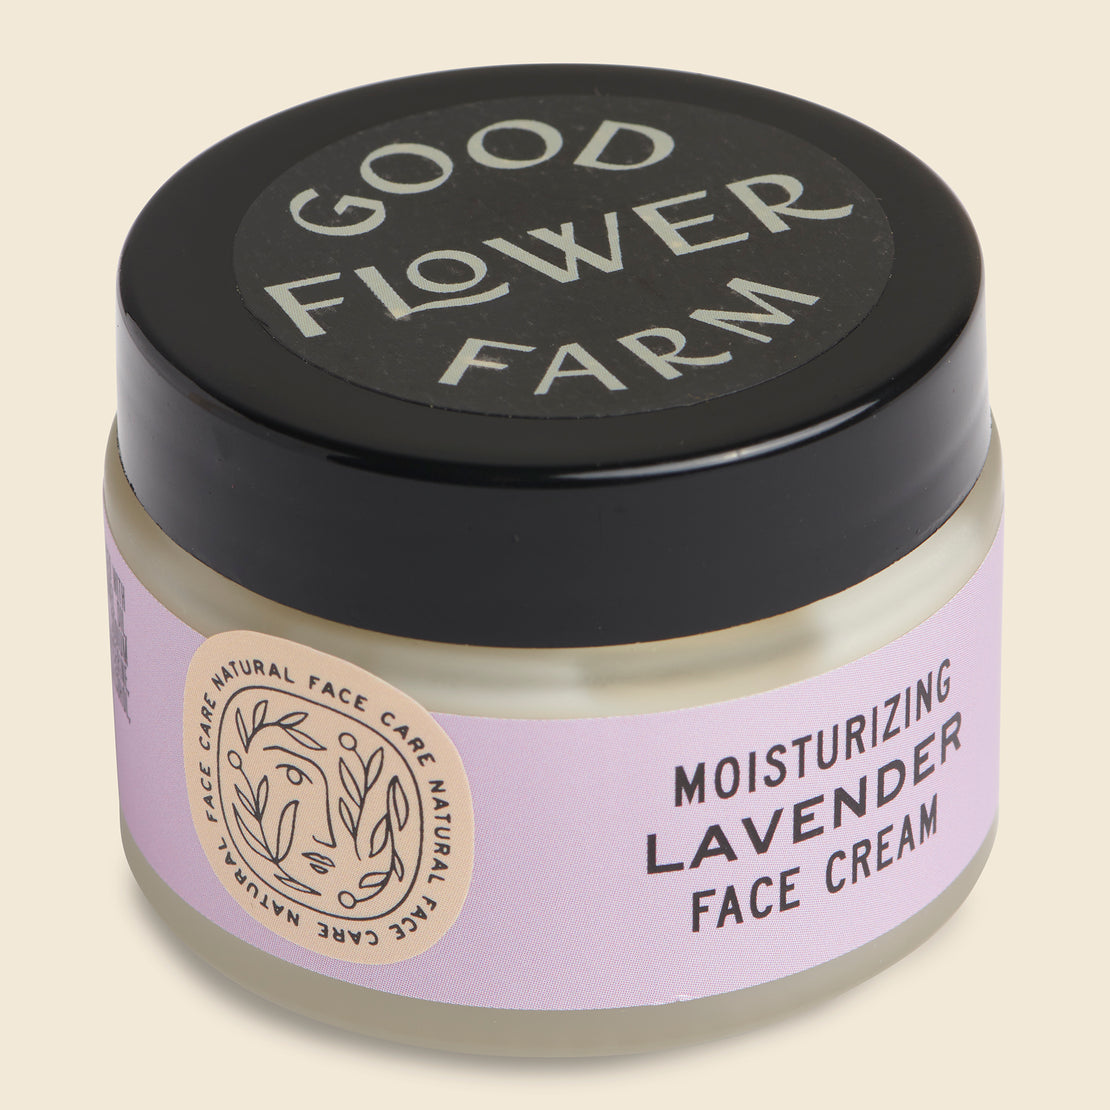 Lavender Face Cream, 1 oz - Good Flower Farm - STAG Provisions - W - Chemist - Skin Care